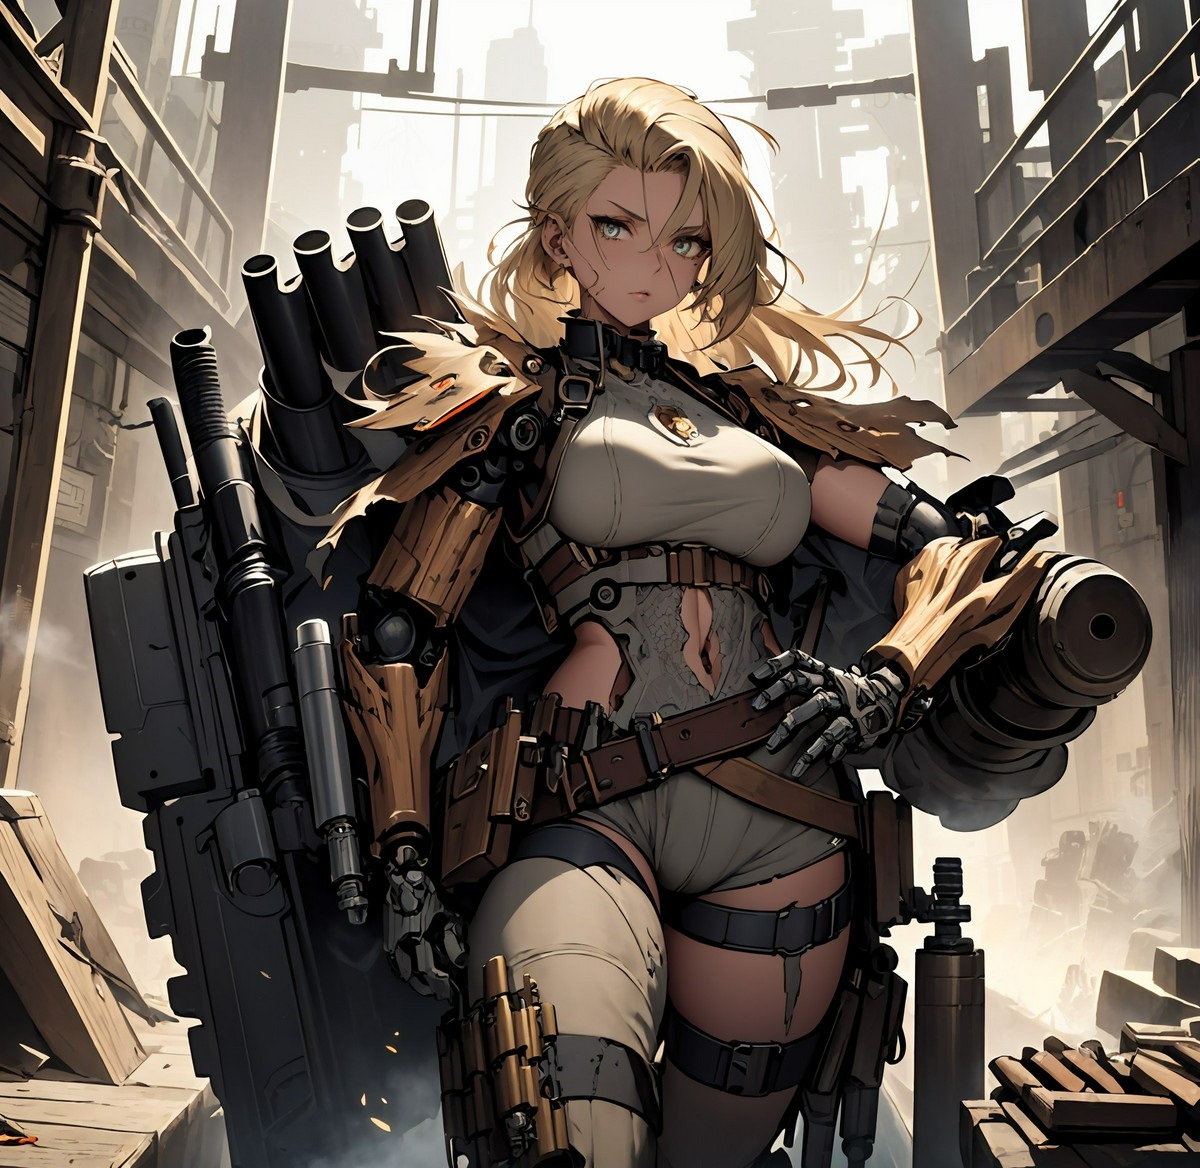 'I am Hilgred ze Heavy Cannon und Mechanic. Vat needs fixing...or crushing?' 
#steampunk #dieselpunk #YodayoAI @YoDayo_Home
#aiwaifus #AIイラスト #AIart #AIgirl #mechagirl #animewaifus #animegirl #aiartcommunity #badass